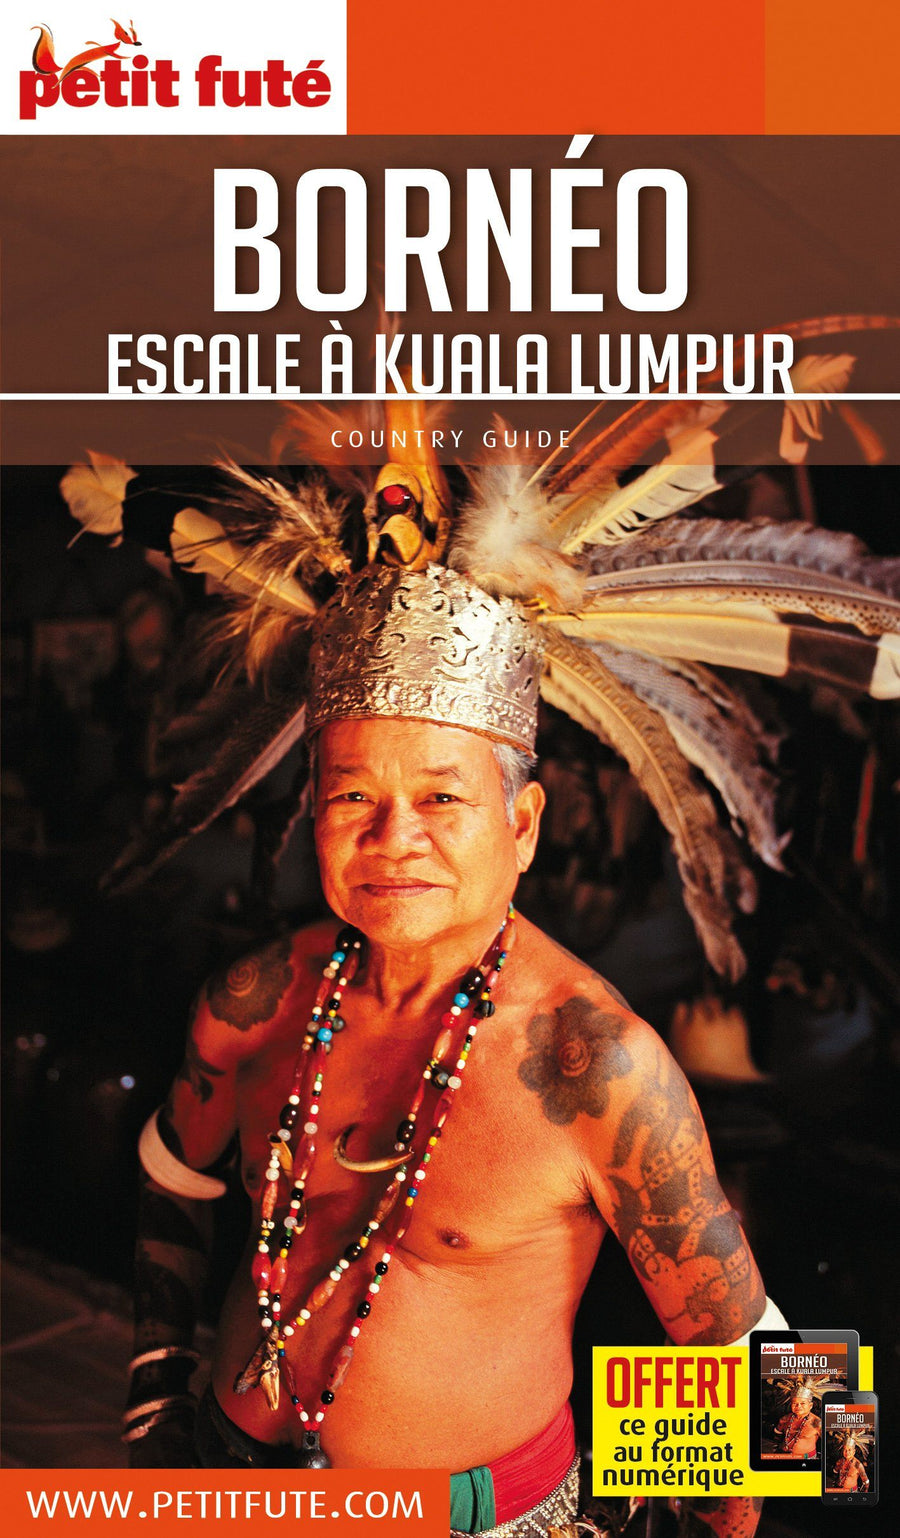 Guide de voyage - Borneo, escale à Kuala Lumpur | Petit Futé guide de voyage Petit Futé 